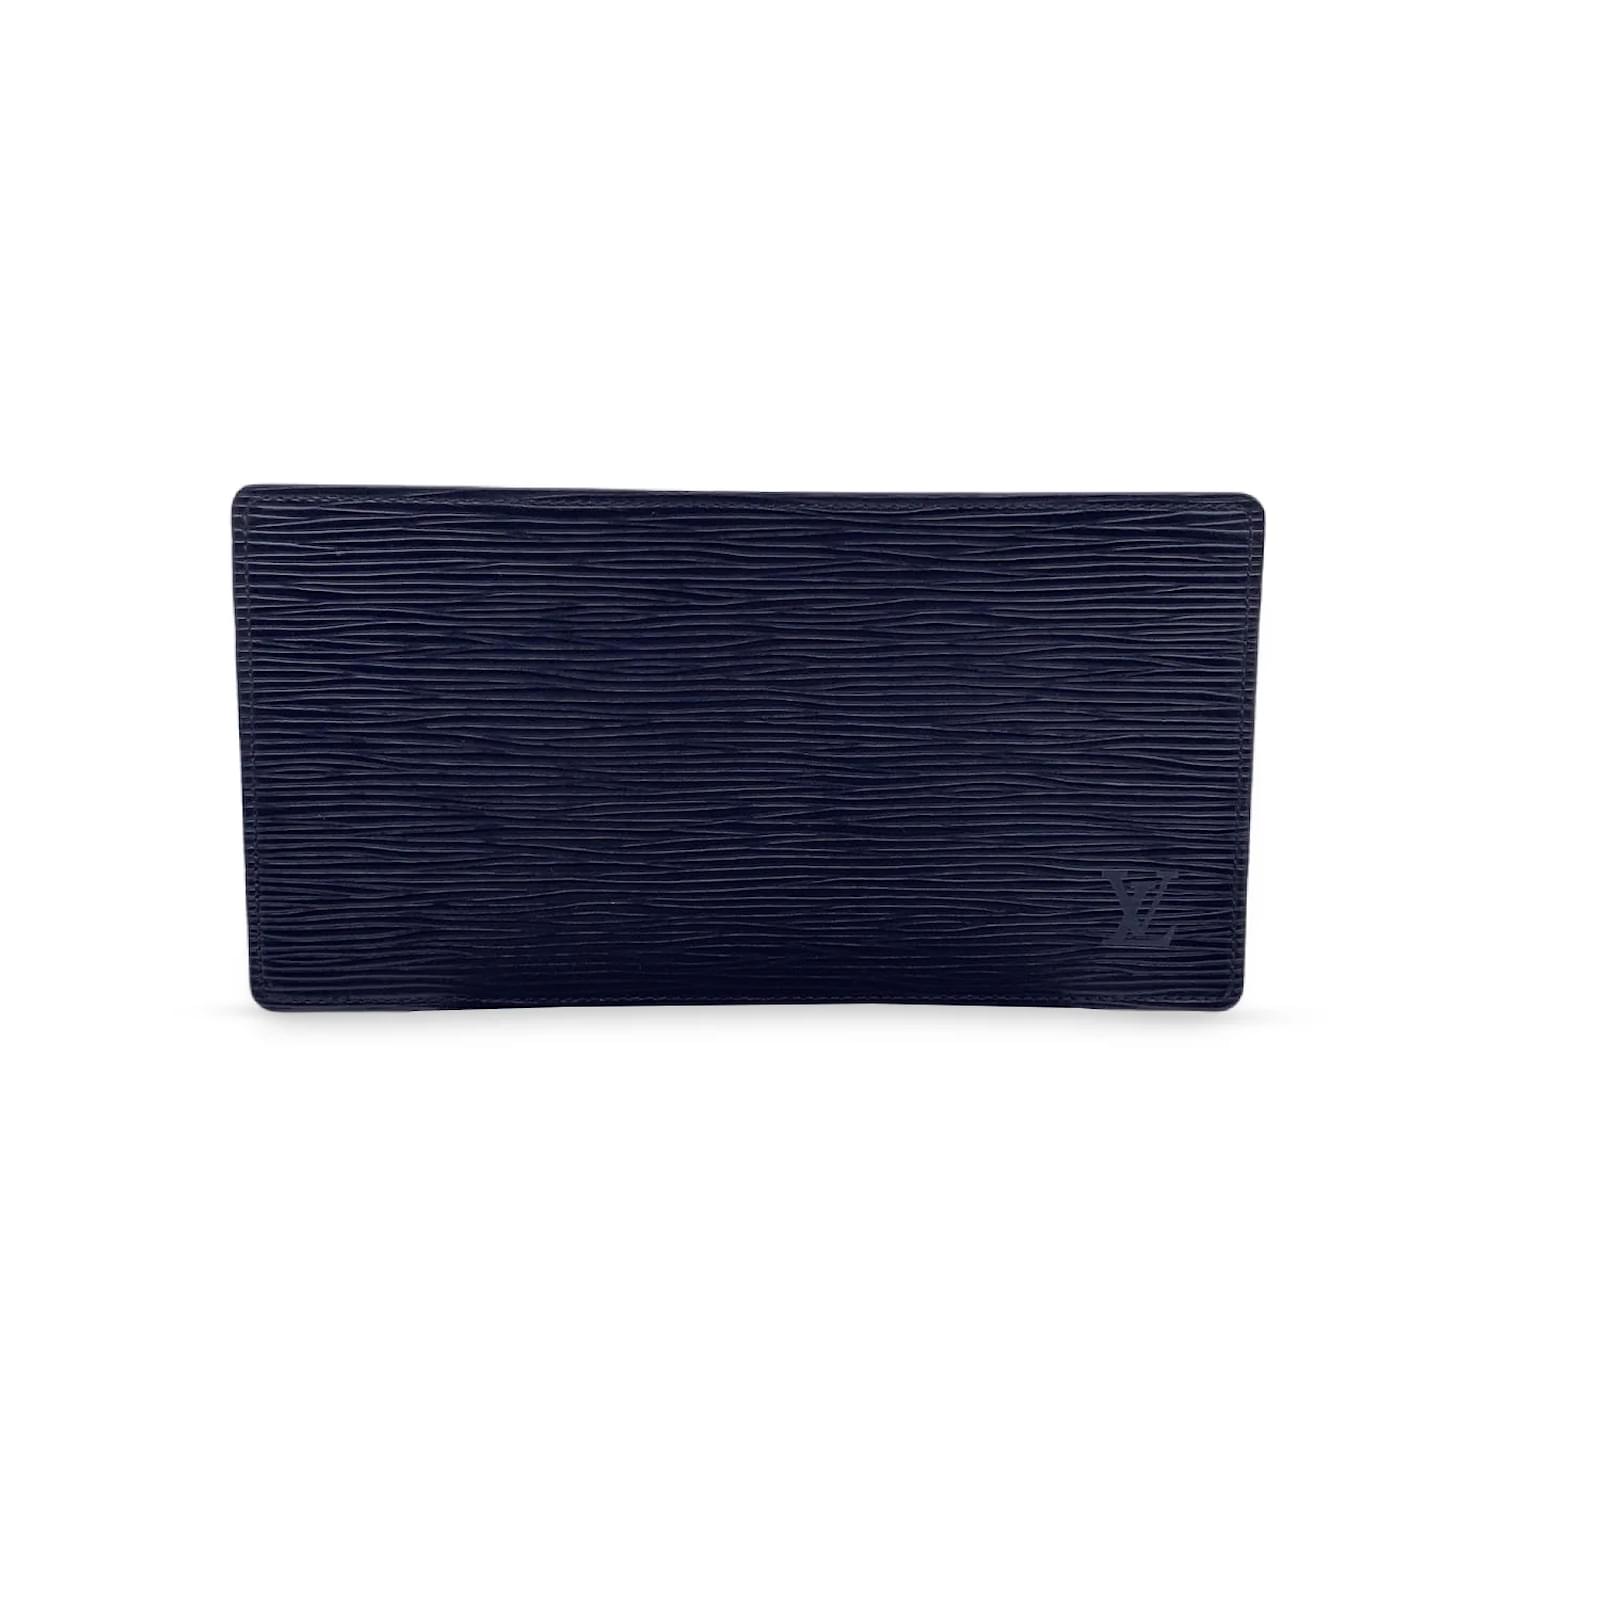 Louis Vuitton Unisex Monogram Malletier Bi Fold Wallet Gray Black Red Blue